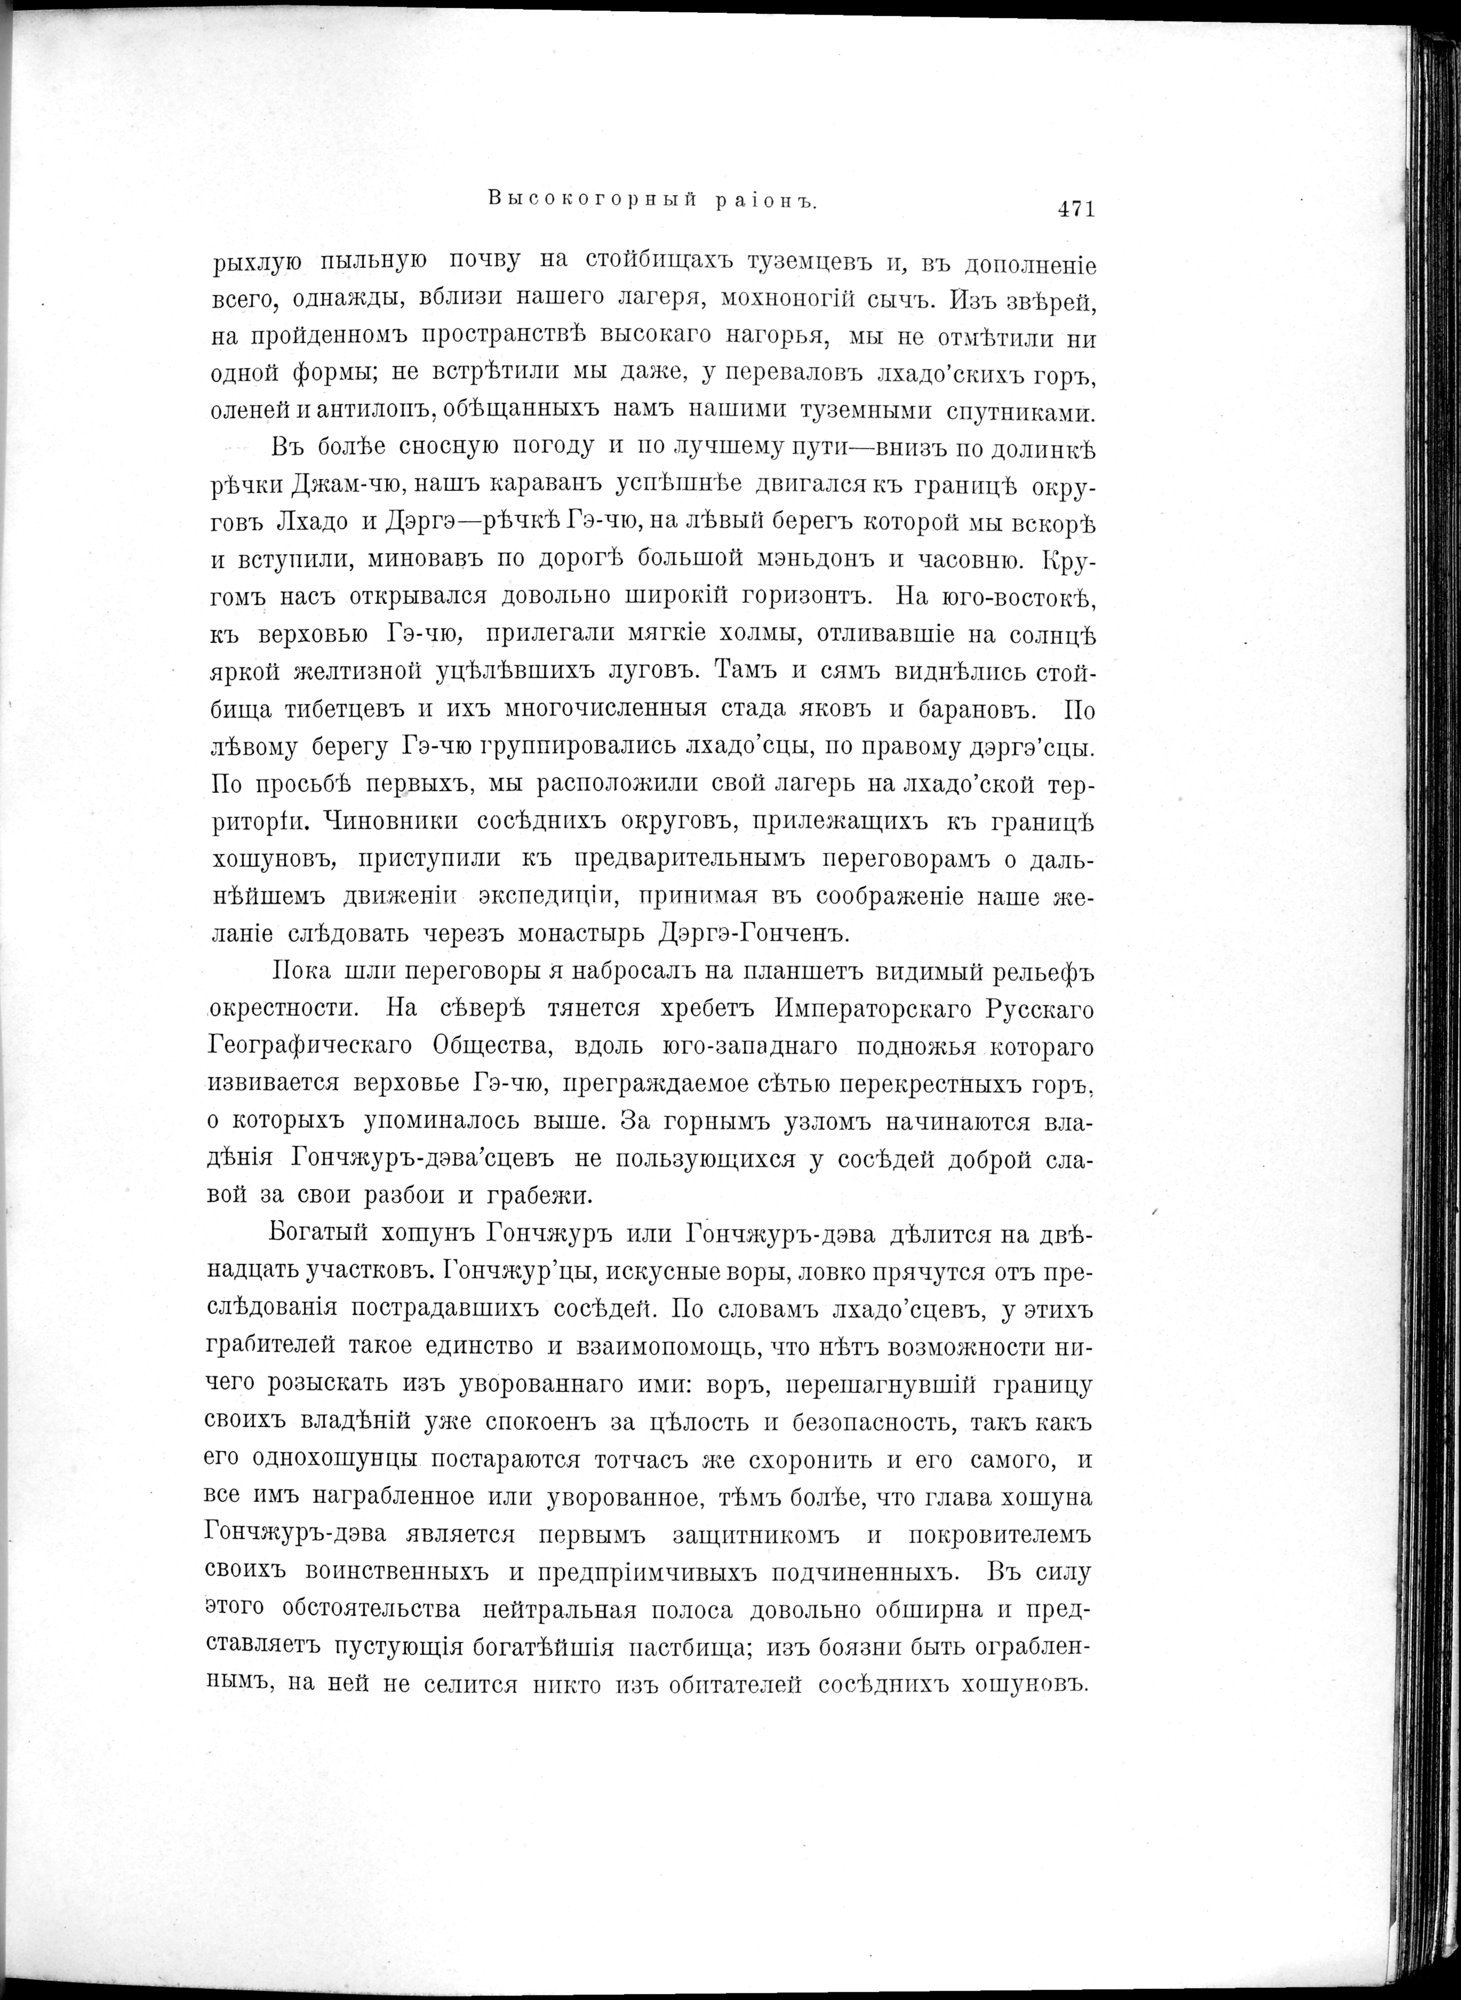 Mongoliia i Kam : vol.2 / Page 277 (Grayscale High Resolution Image)